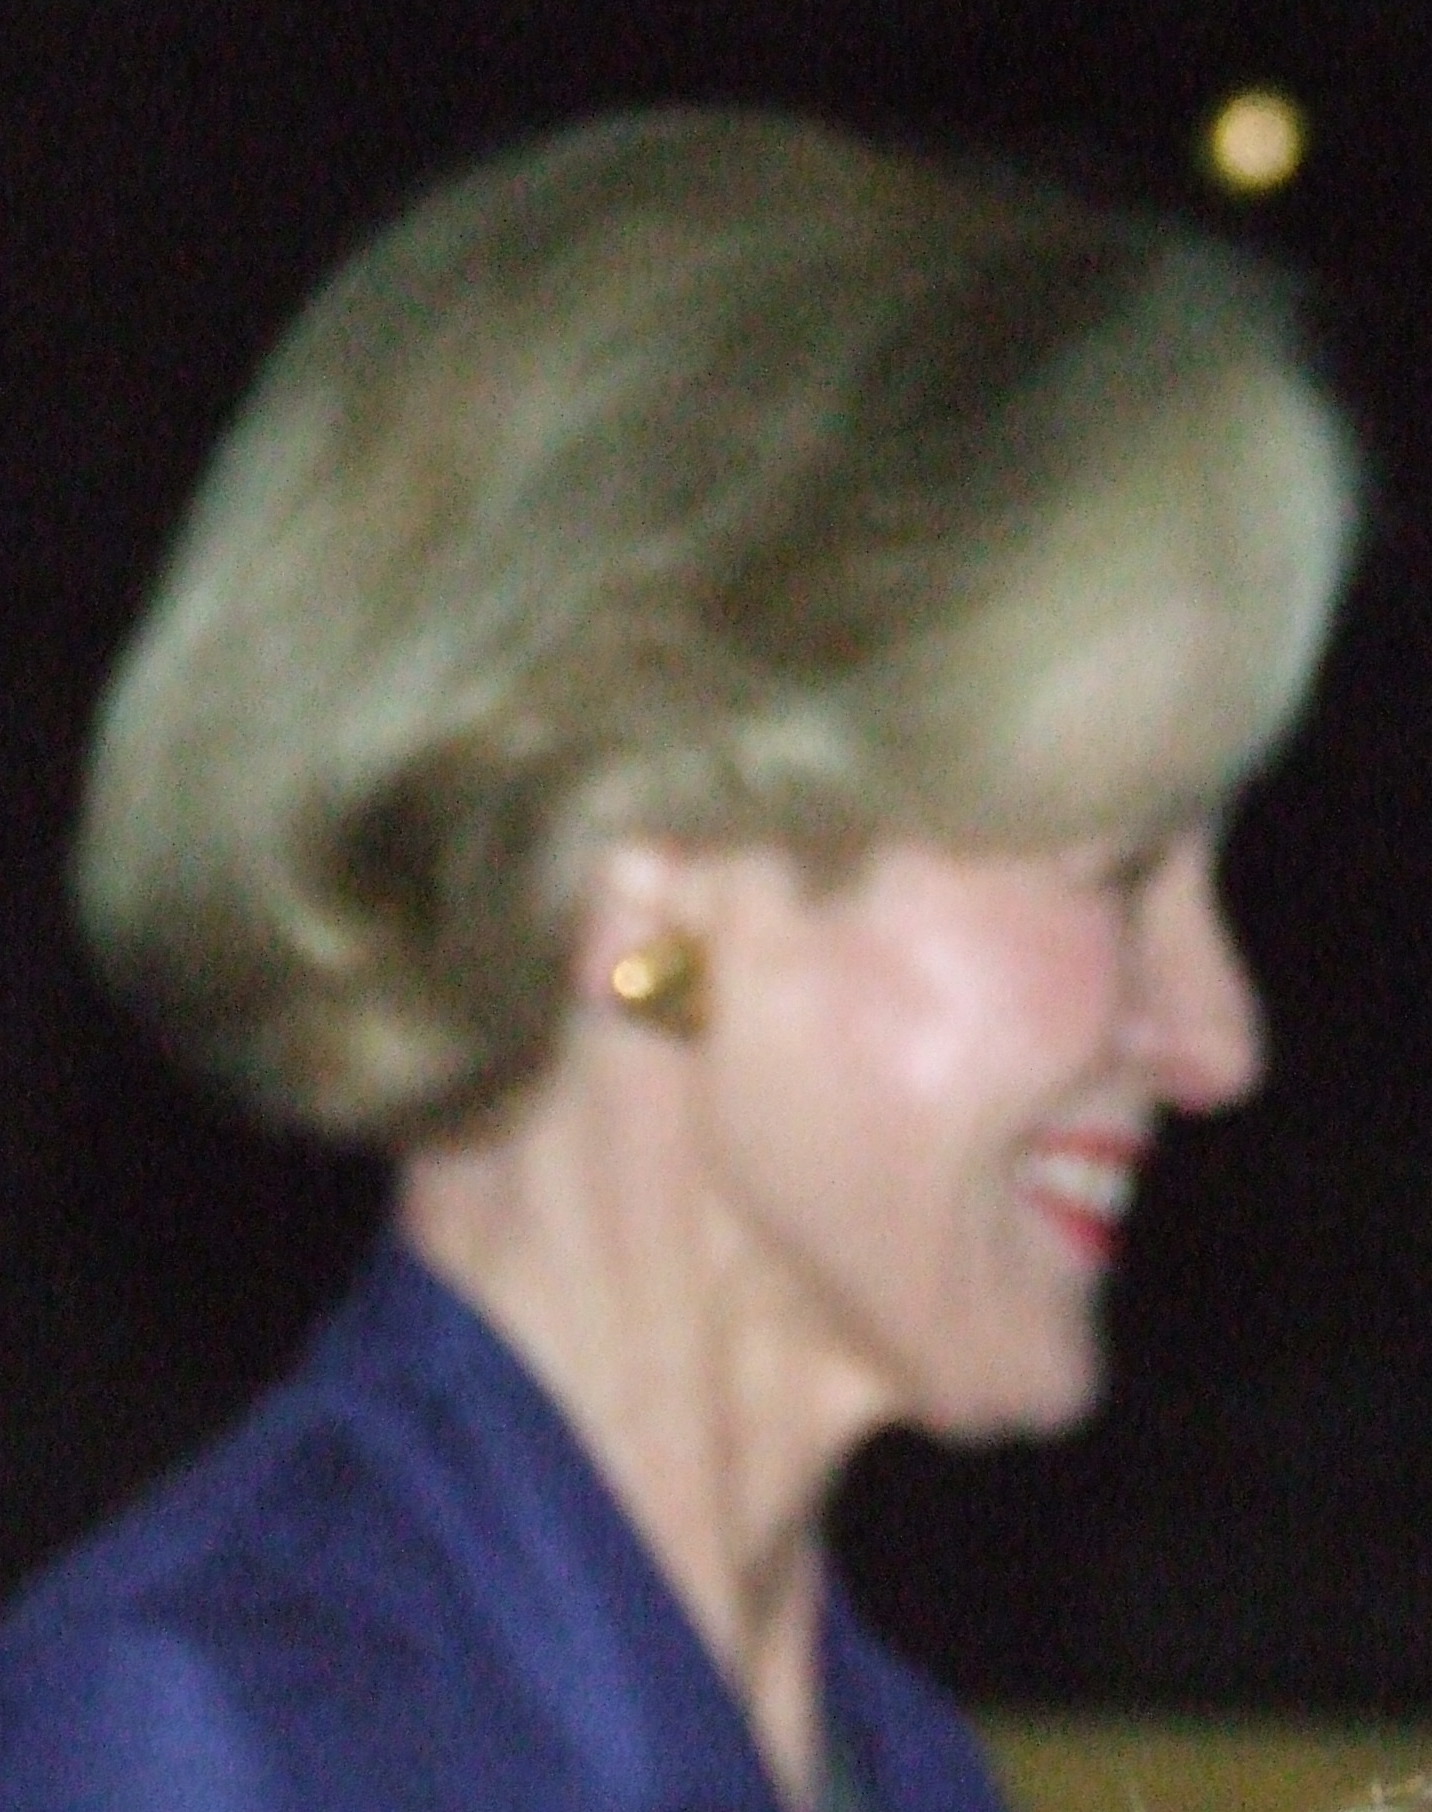 the queen of sweden arrives for a banquet at a el